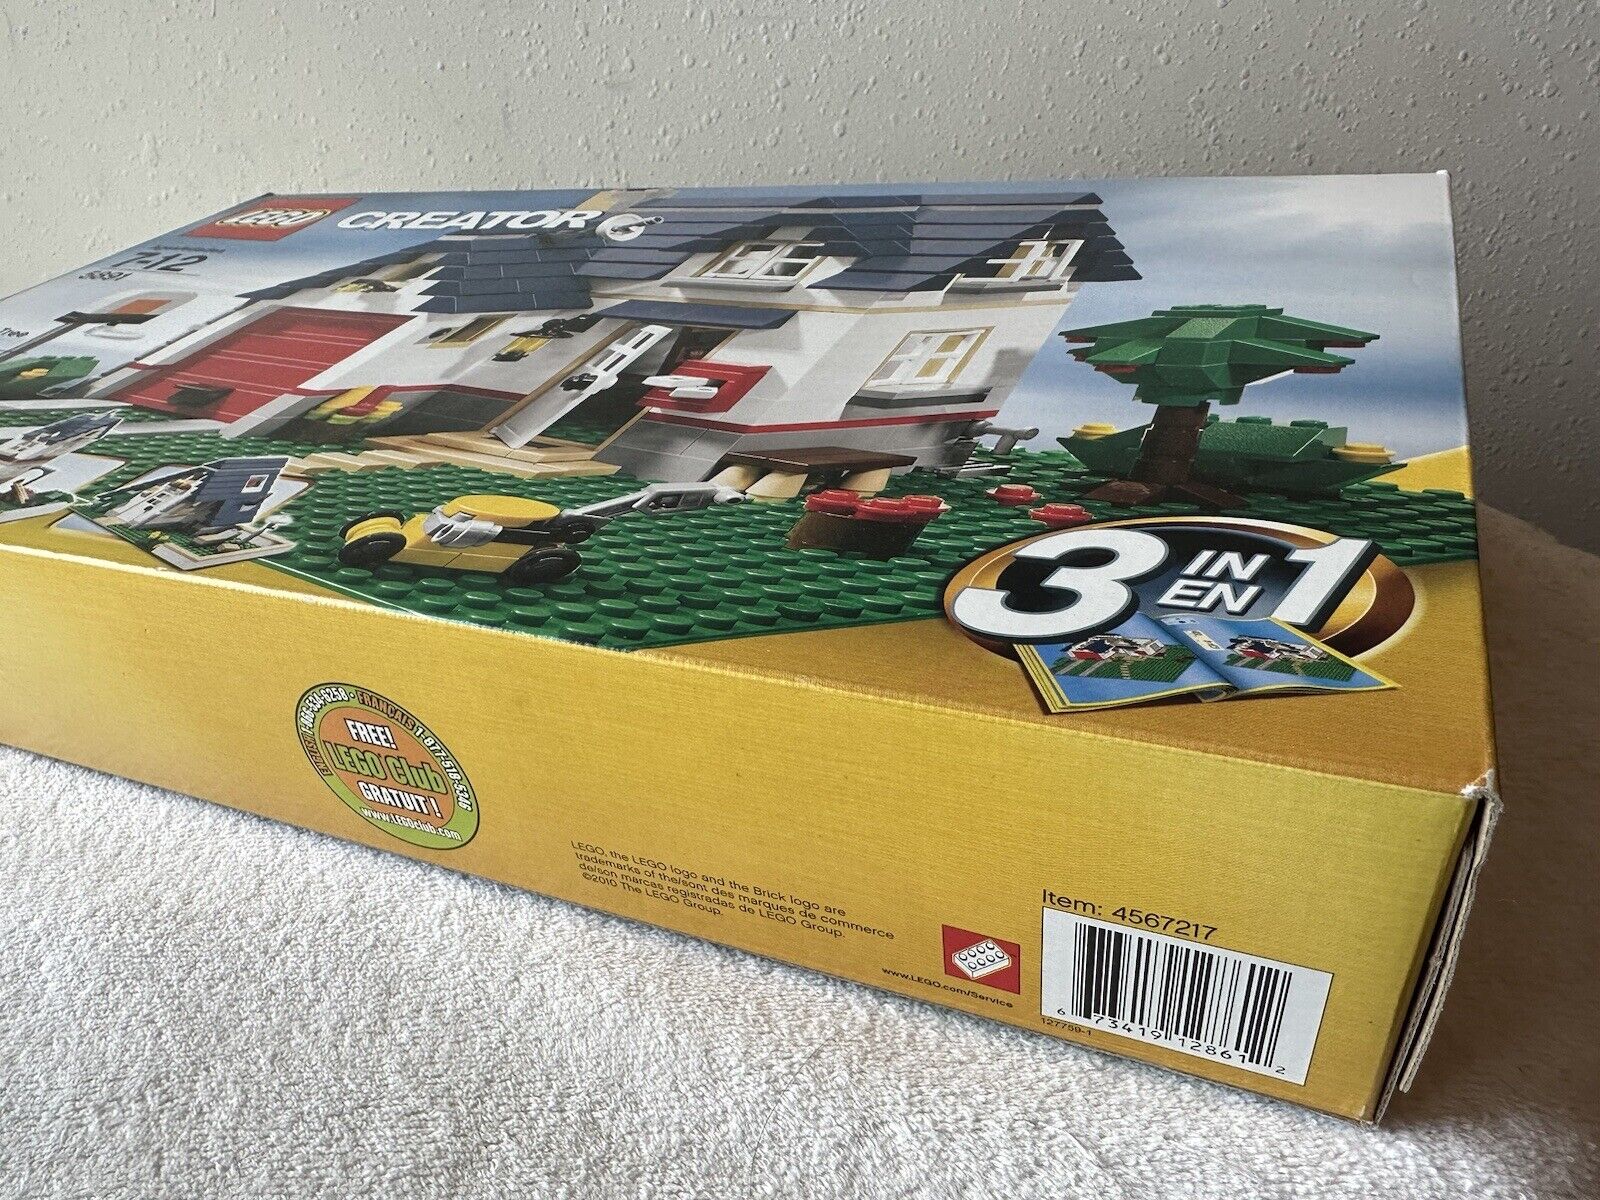 LEGO CREATOR 3 in 1: 5891 APPLE TREE HOUSE (2010 BOX) 673419128612 | eBay